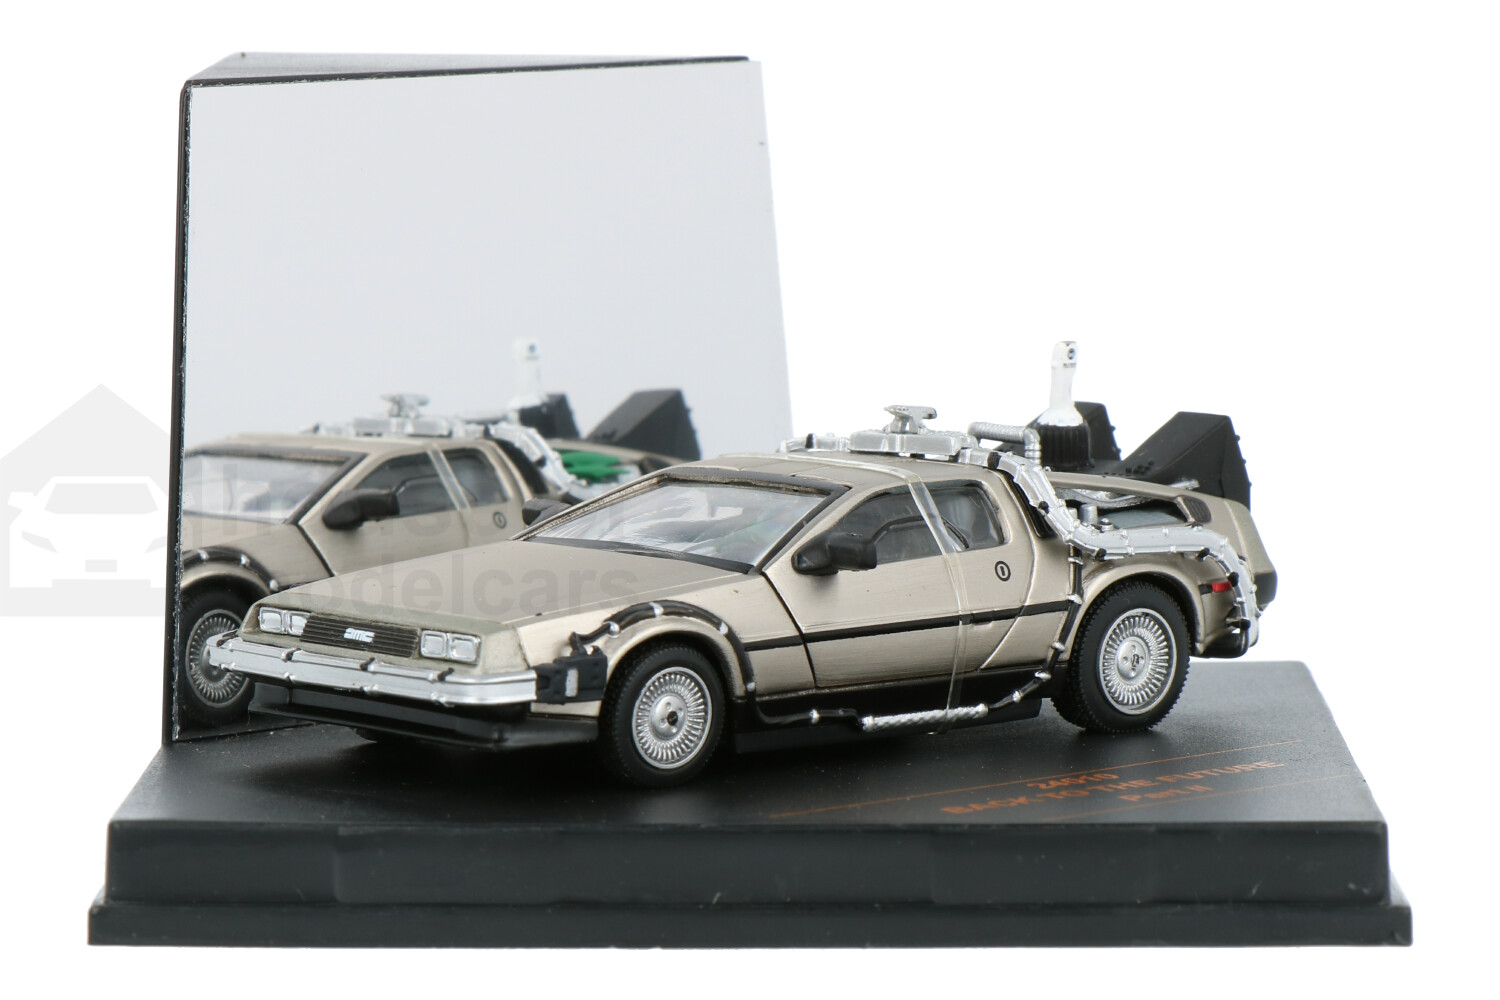 DeLorean DMC 12 - Modelauto schaal 1:43